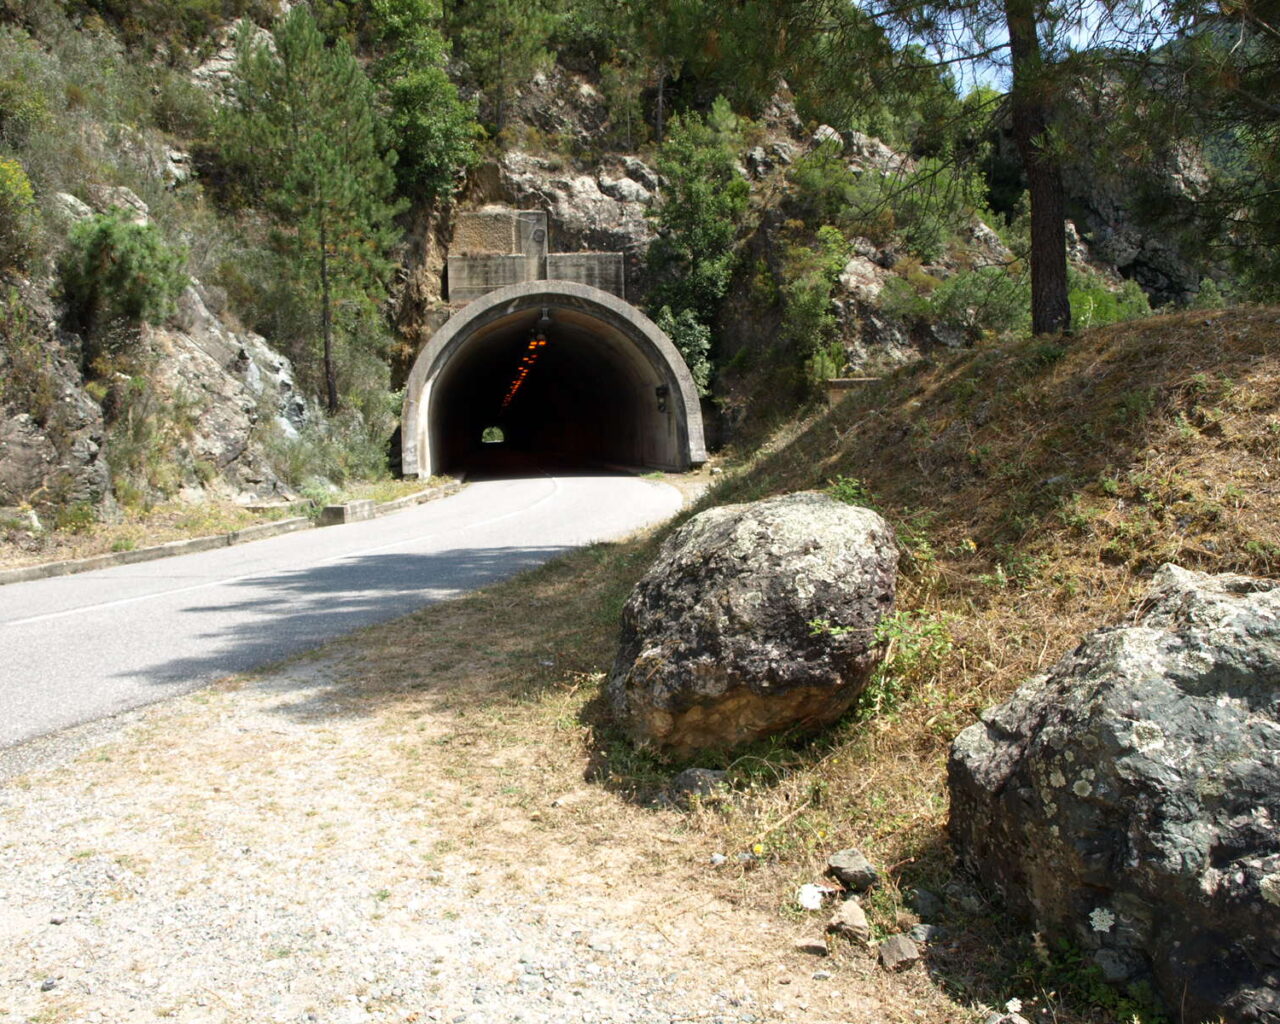 36 Le tunnel du defile de lInzecca